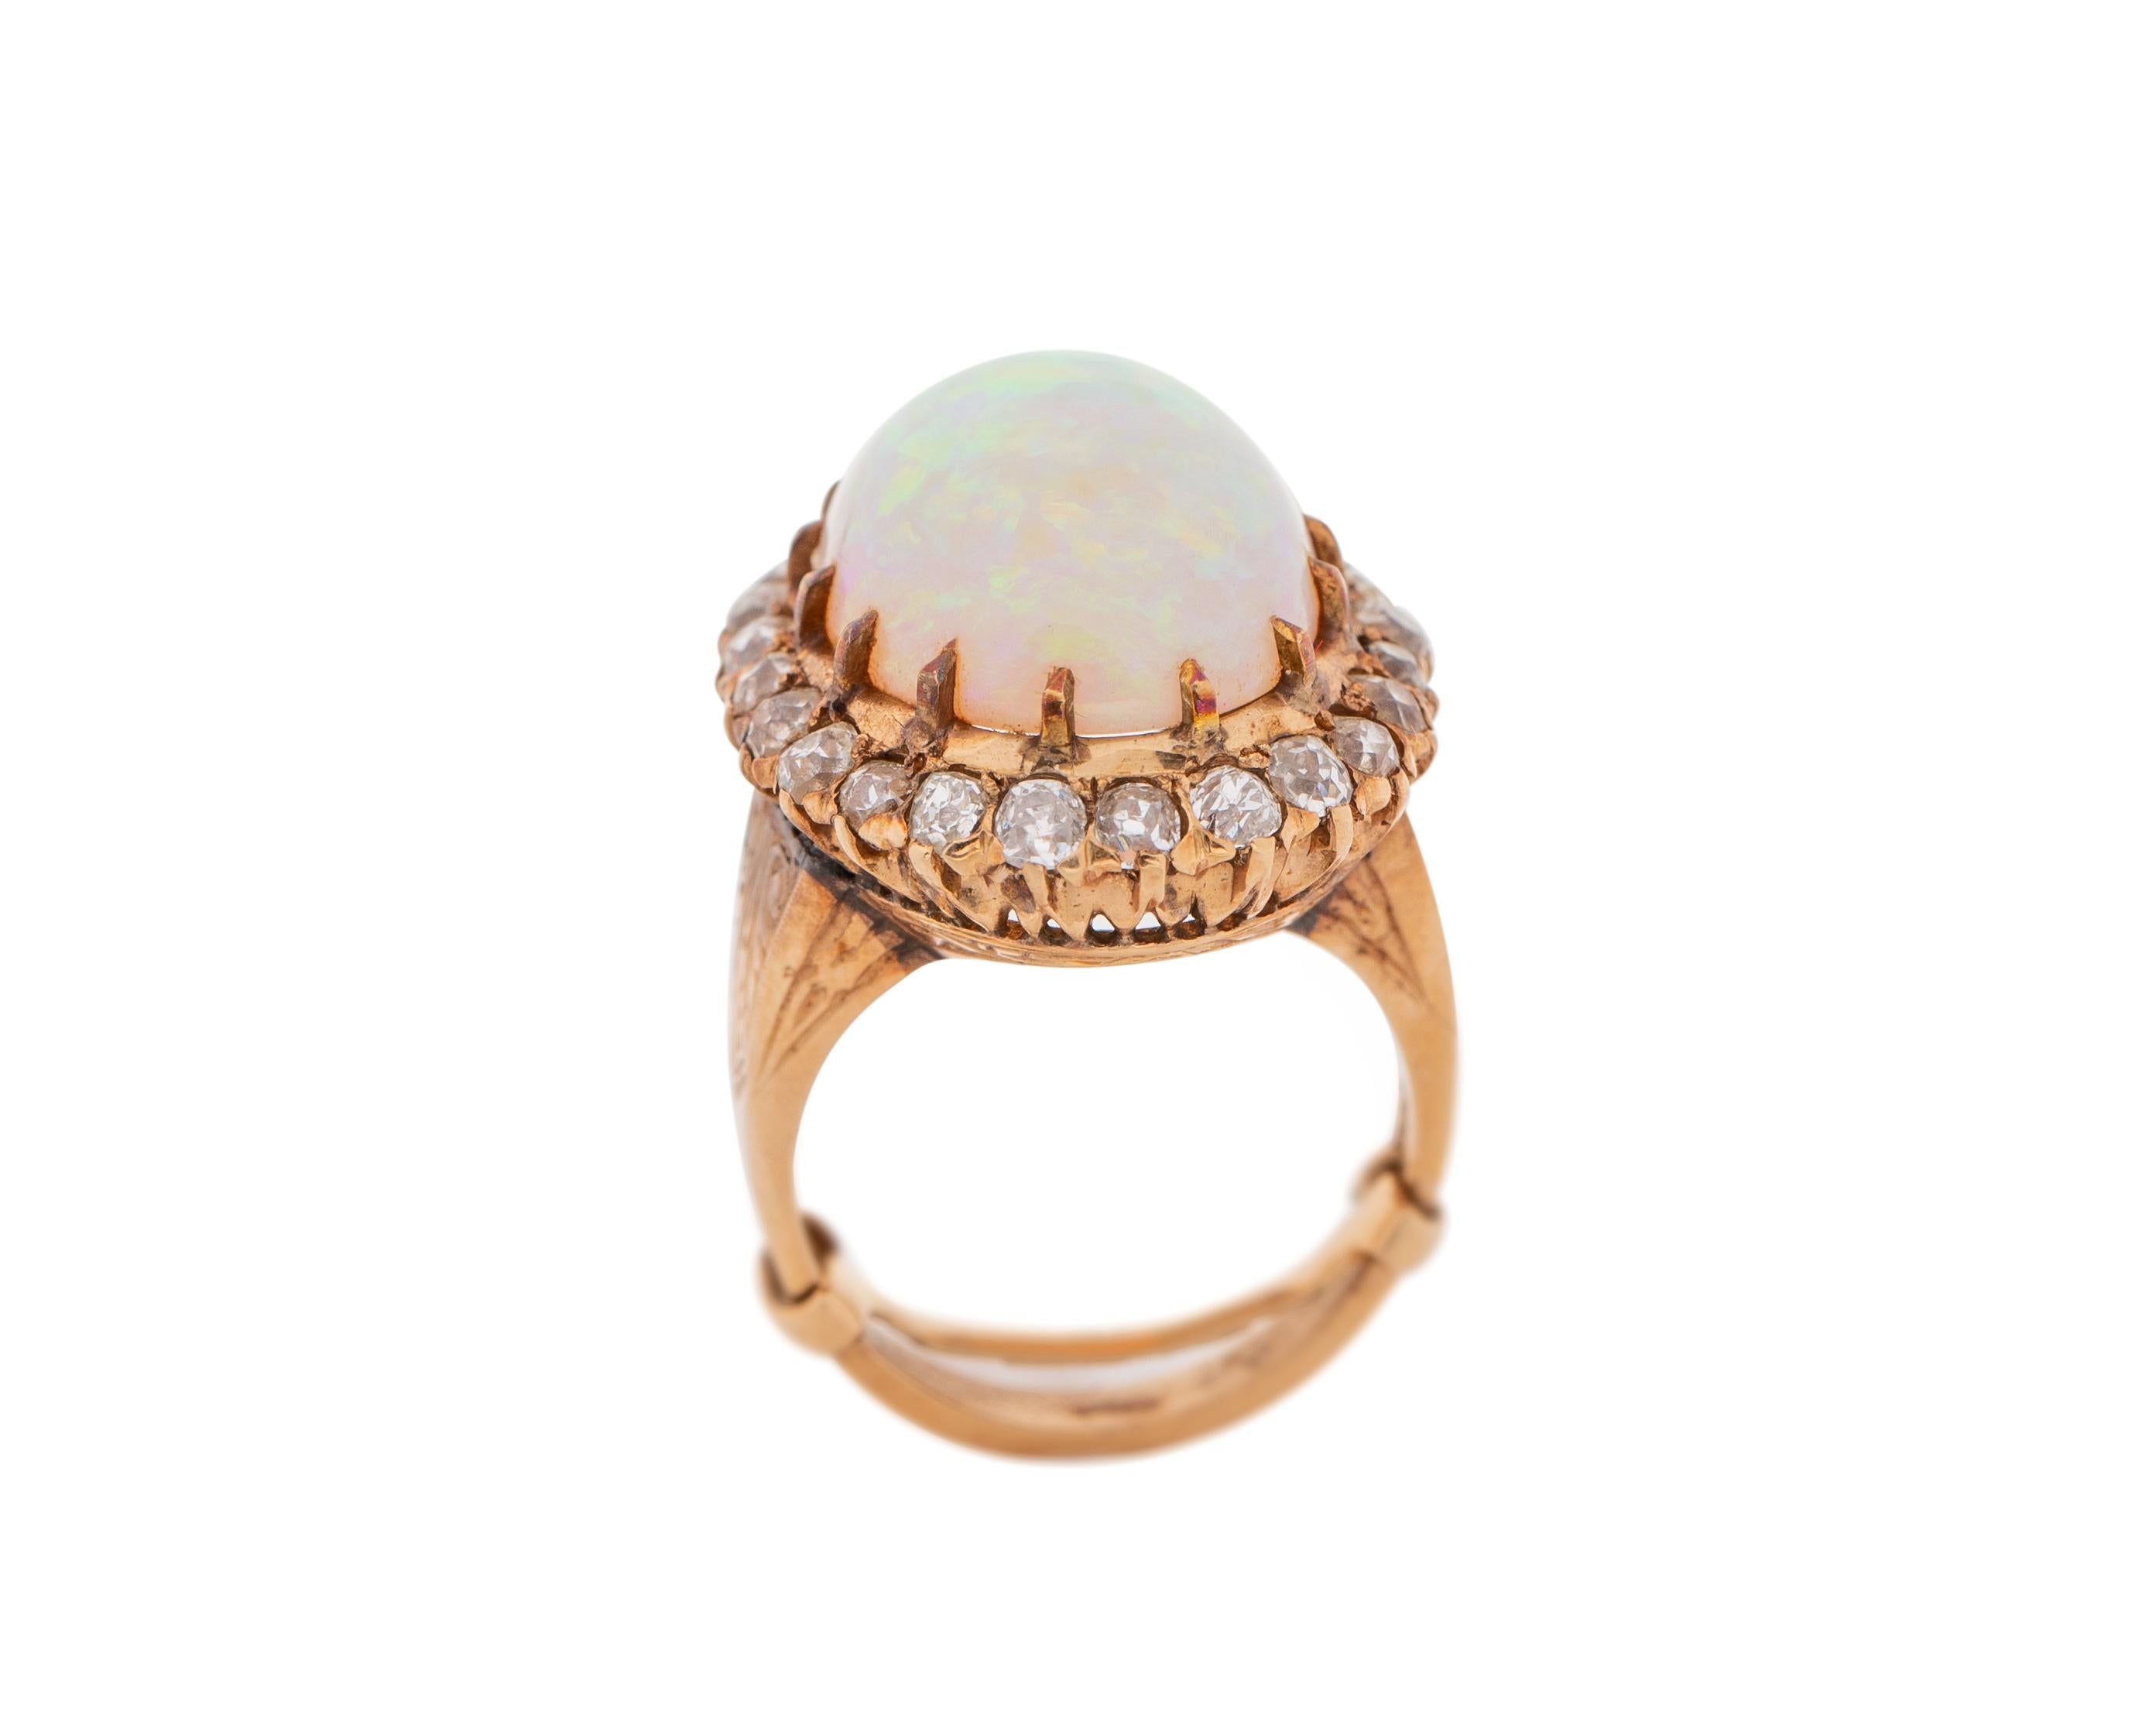 15 carat opal price